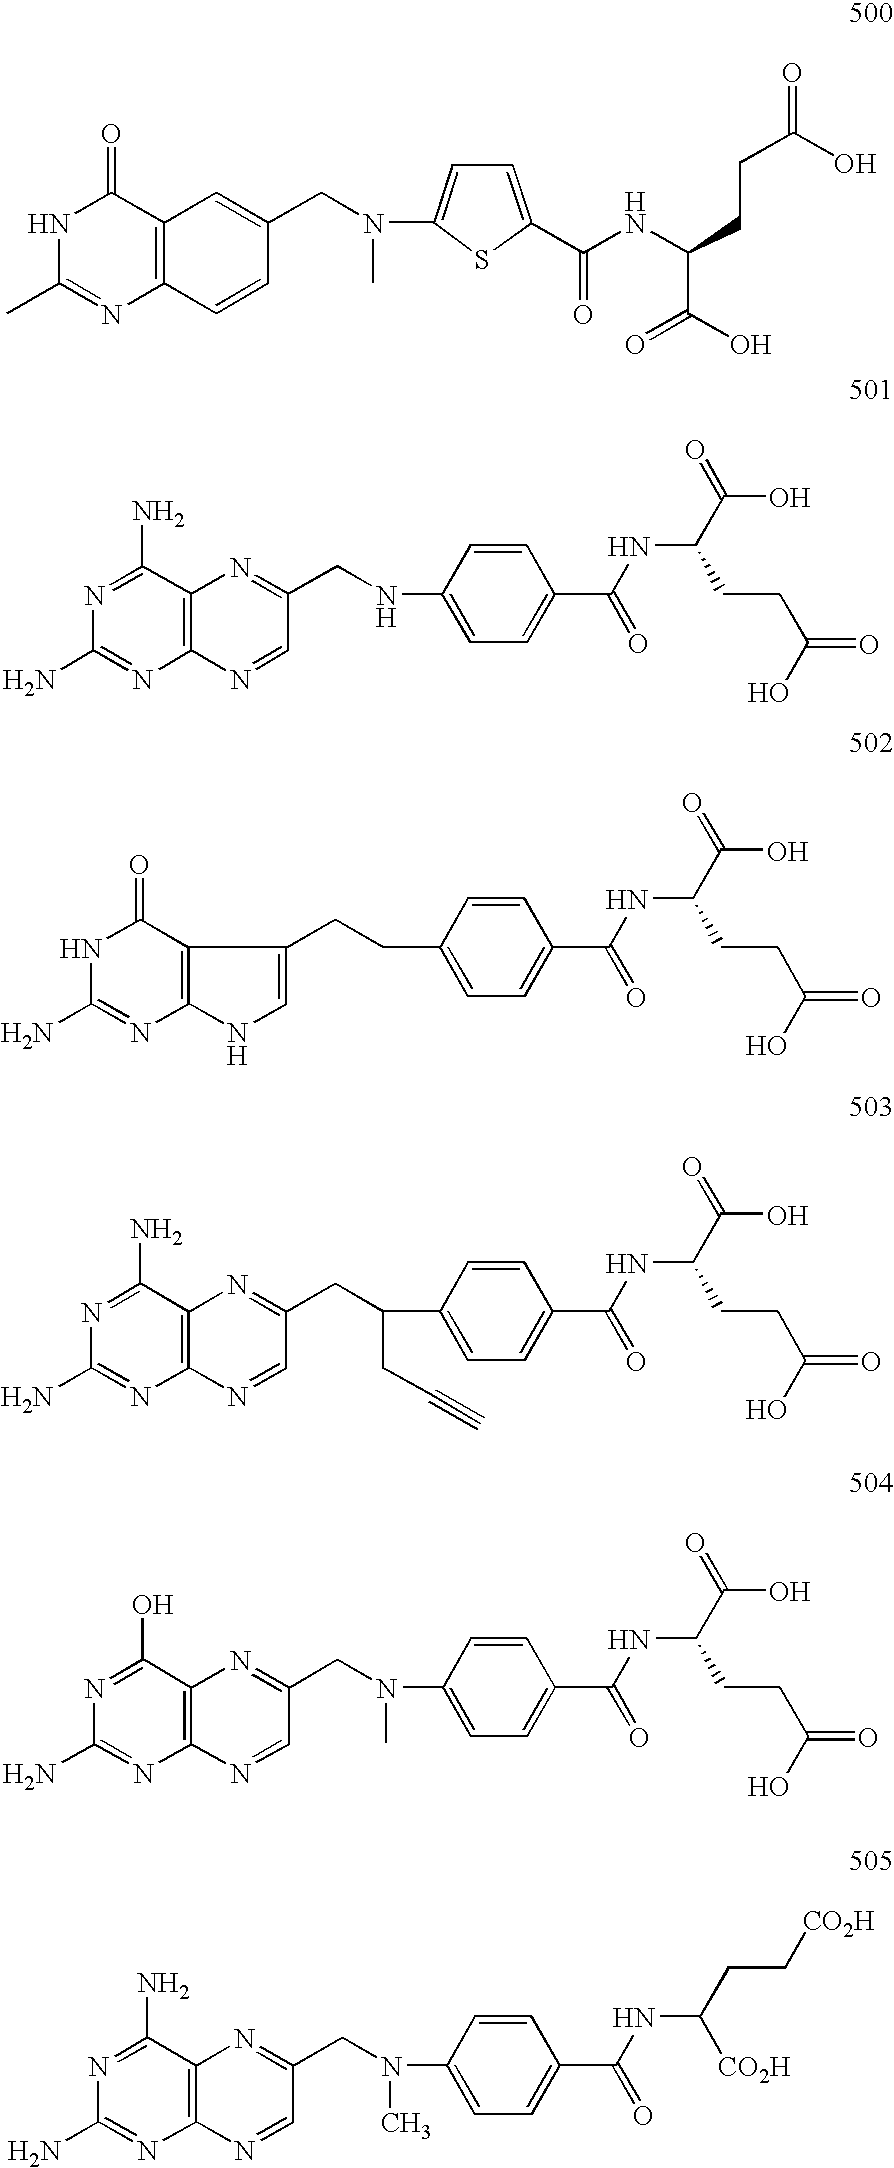 Phosphonate analogs of antimetabolites